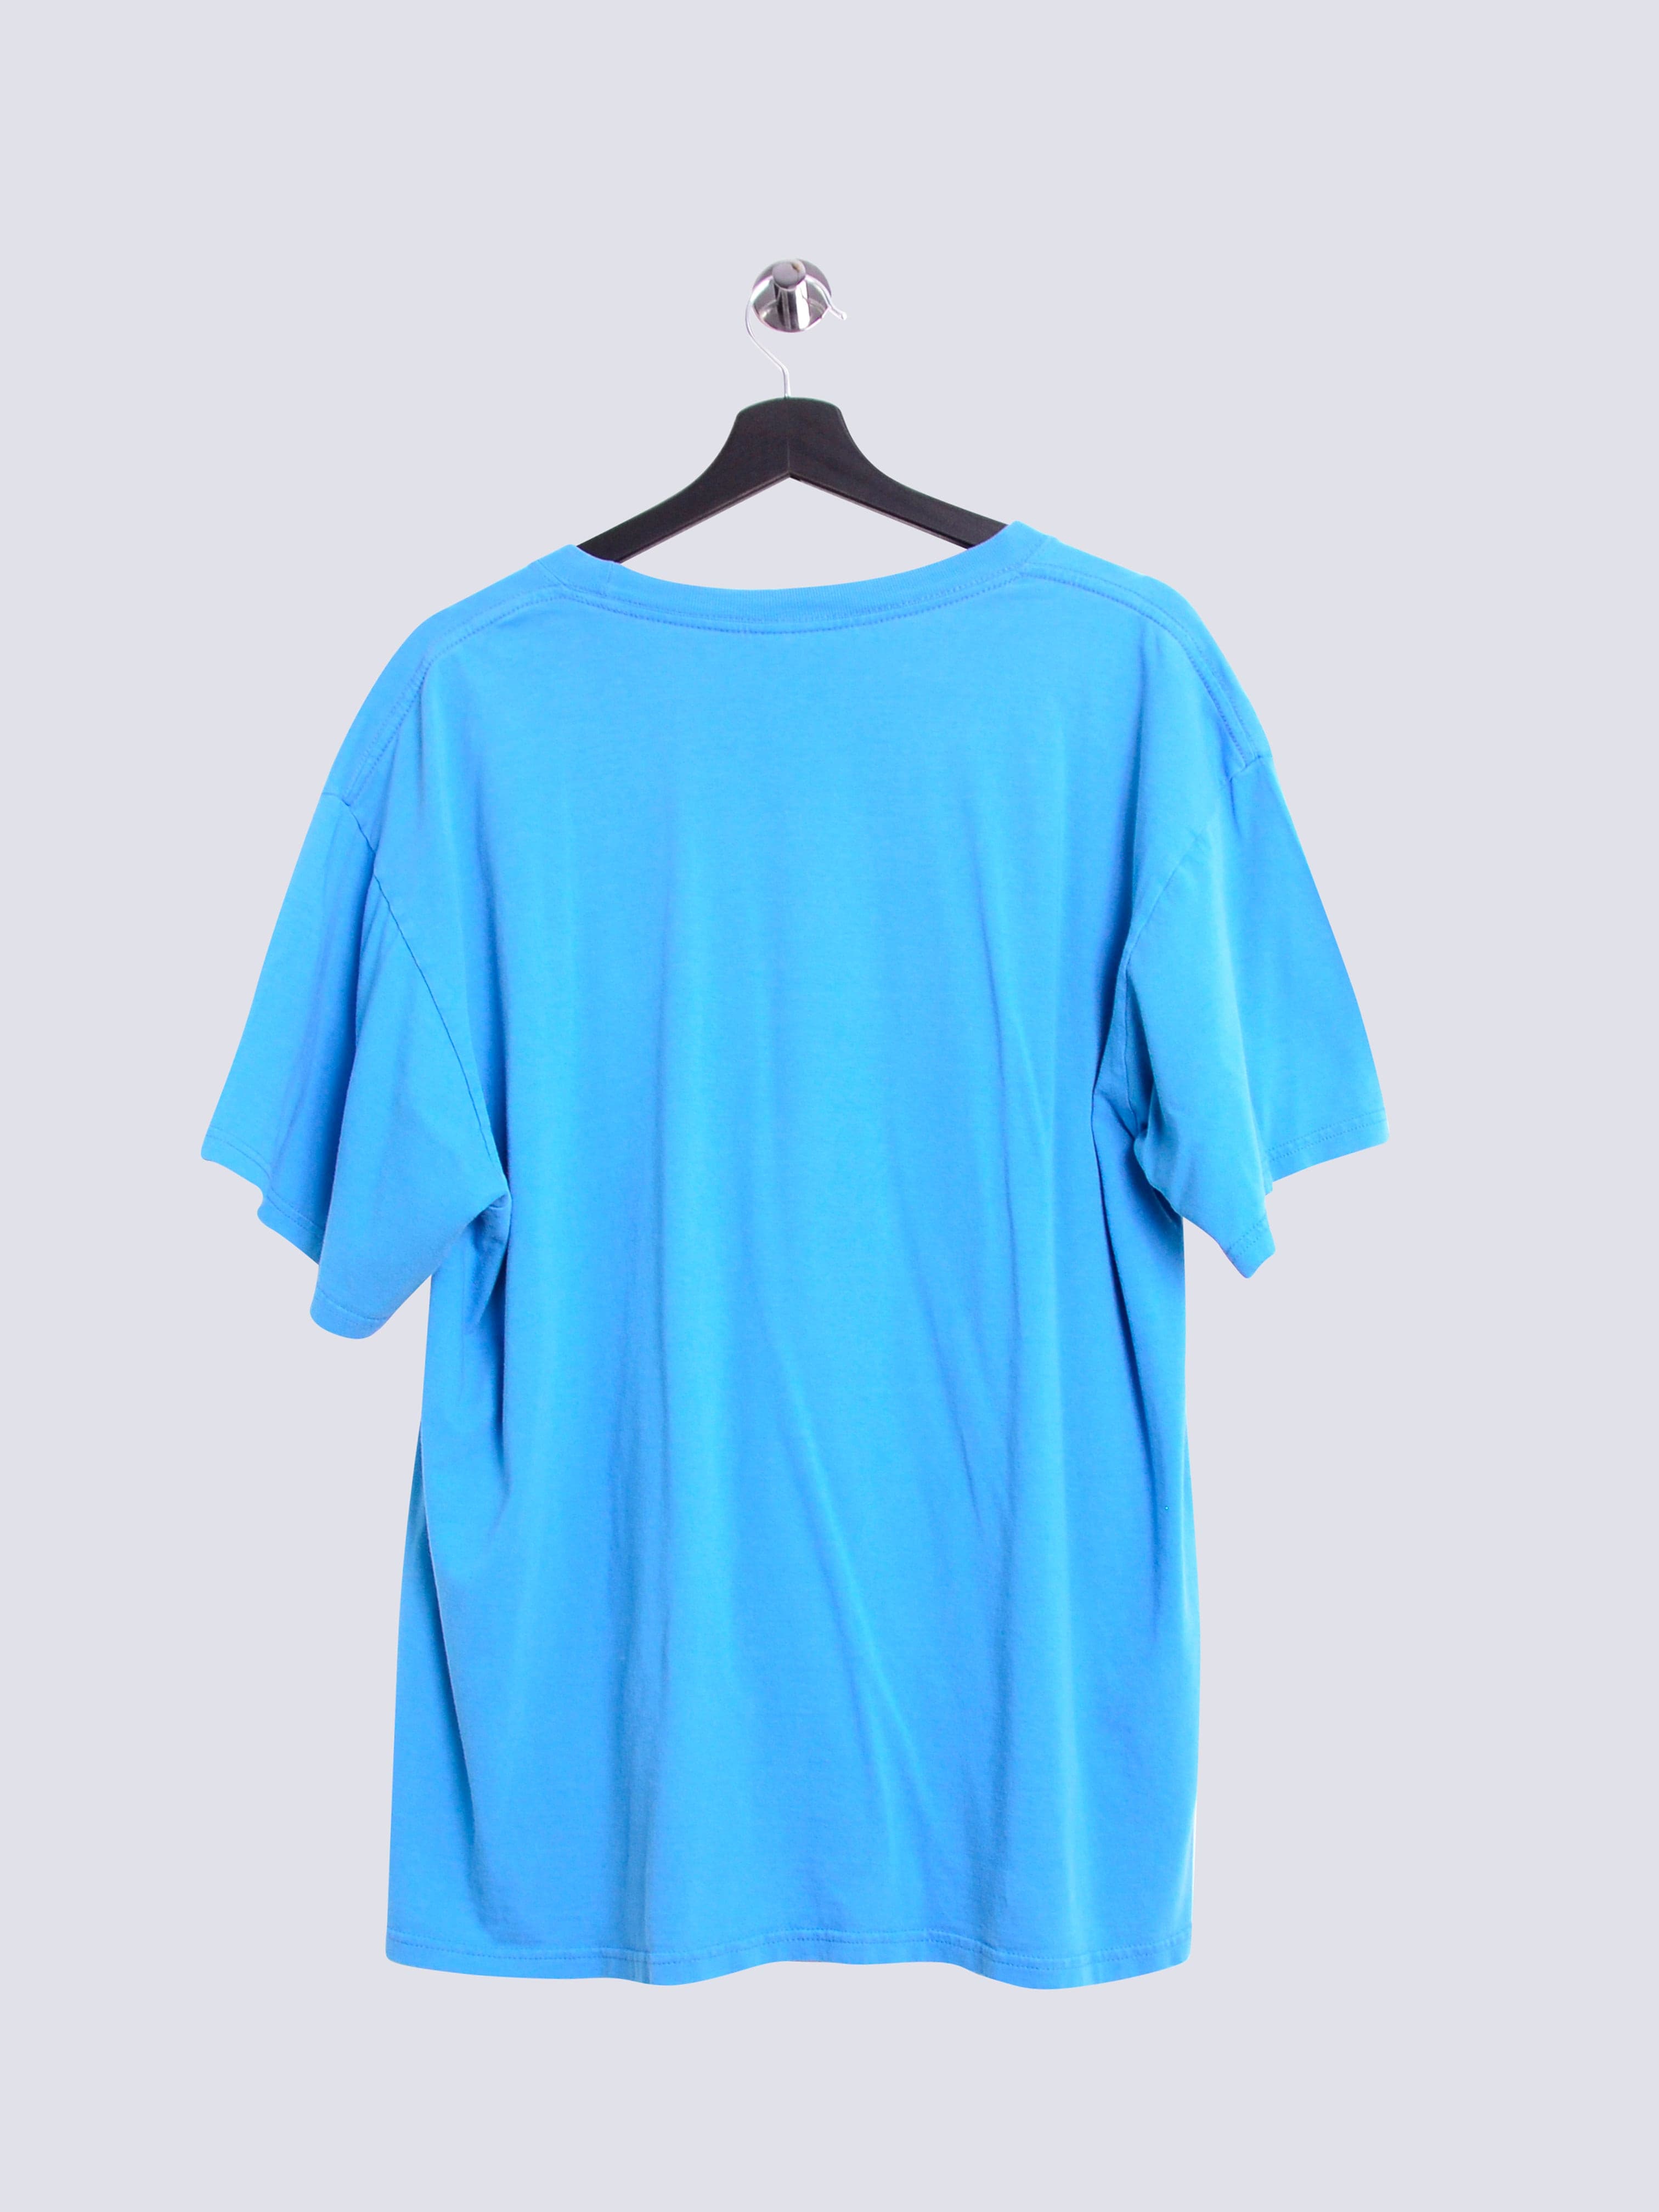 Hard Rock Cafe Cayman Islands Shirt Blue // Small - RHAGHOUSE VINTAGE